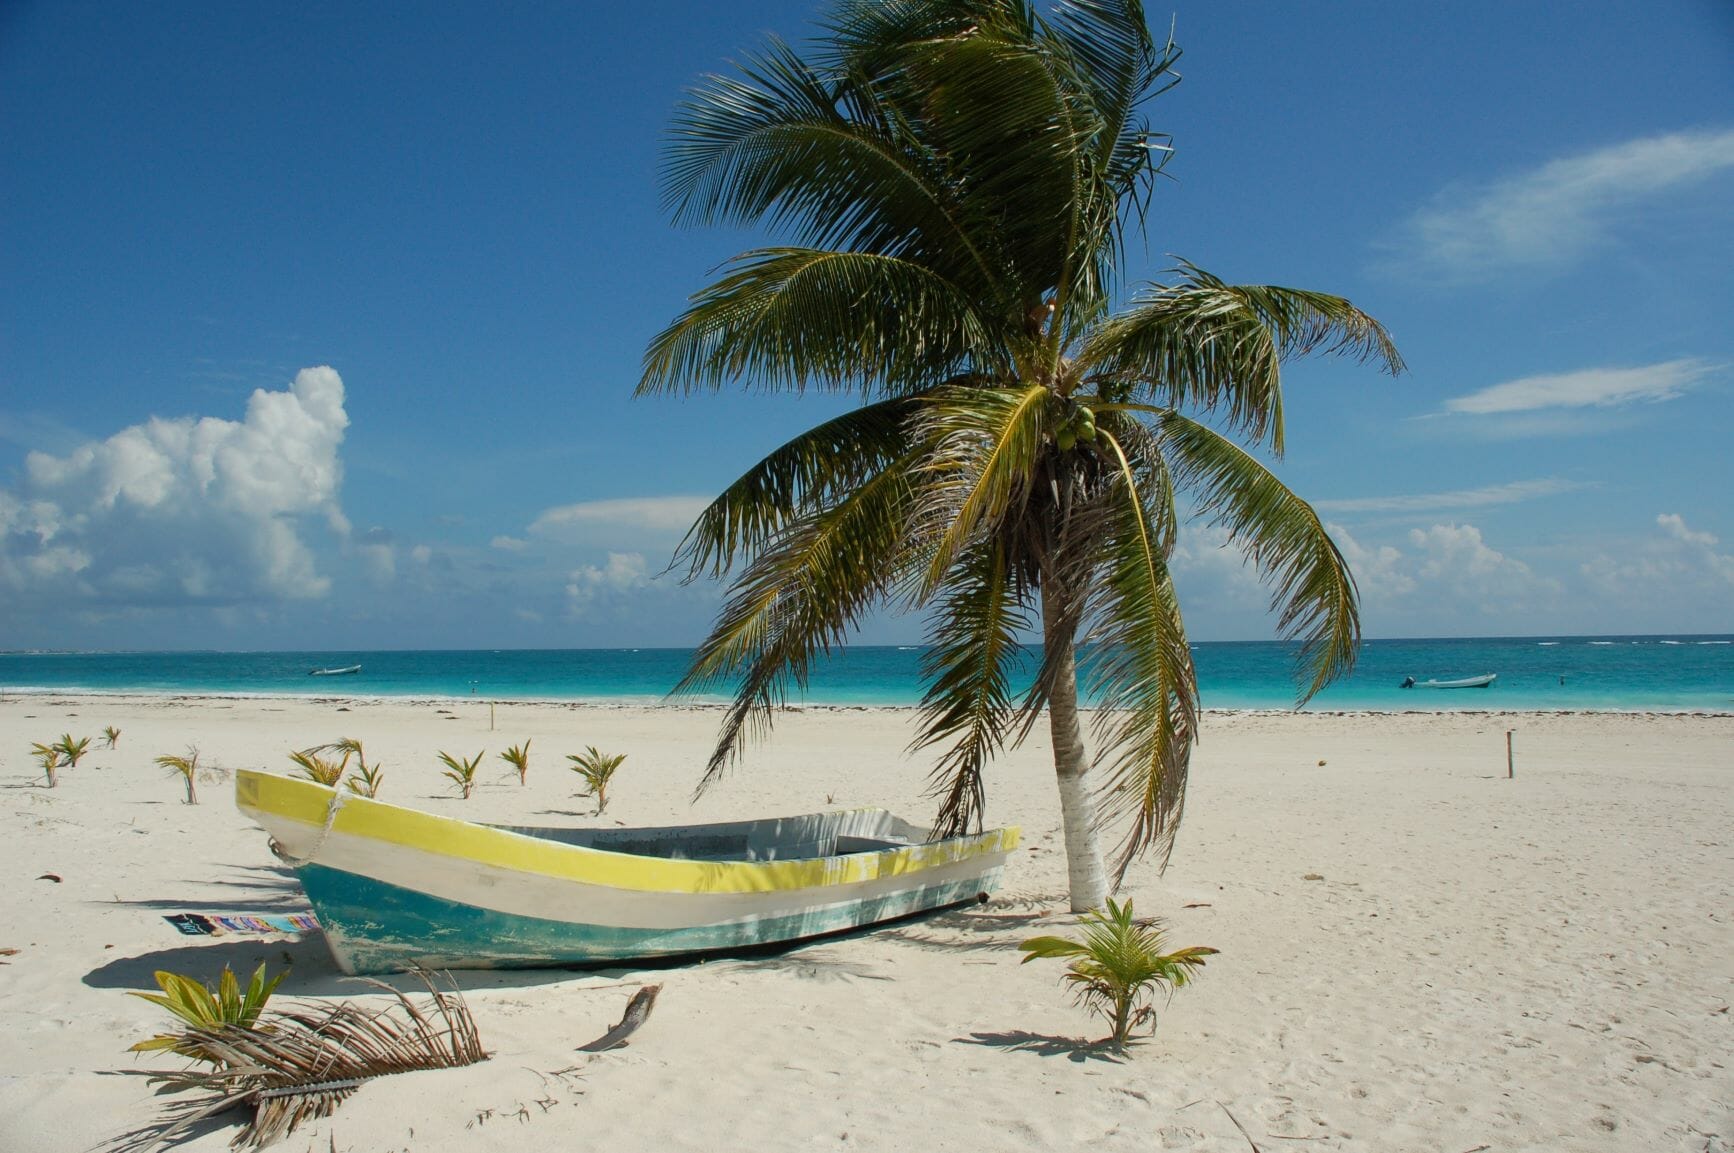 Yucatan Peninsula in Mexico Tulum Beach